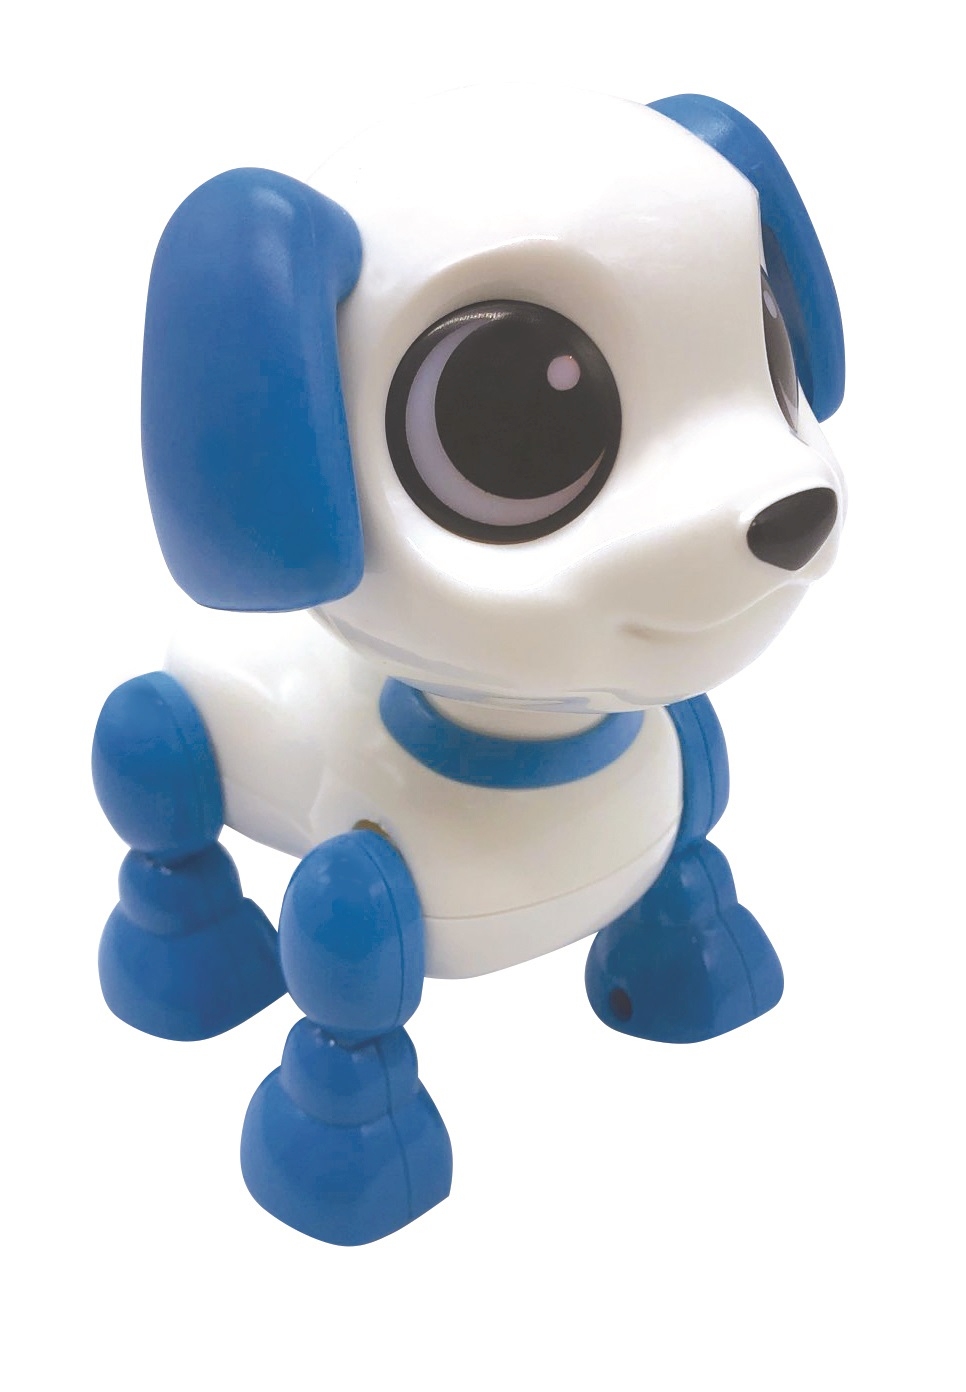 Buy Lexibook Power Puppy Mini Dog Robot